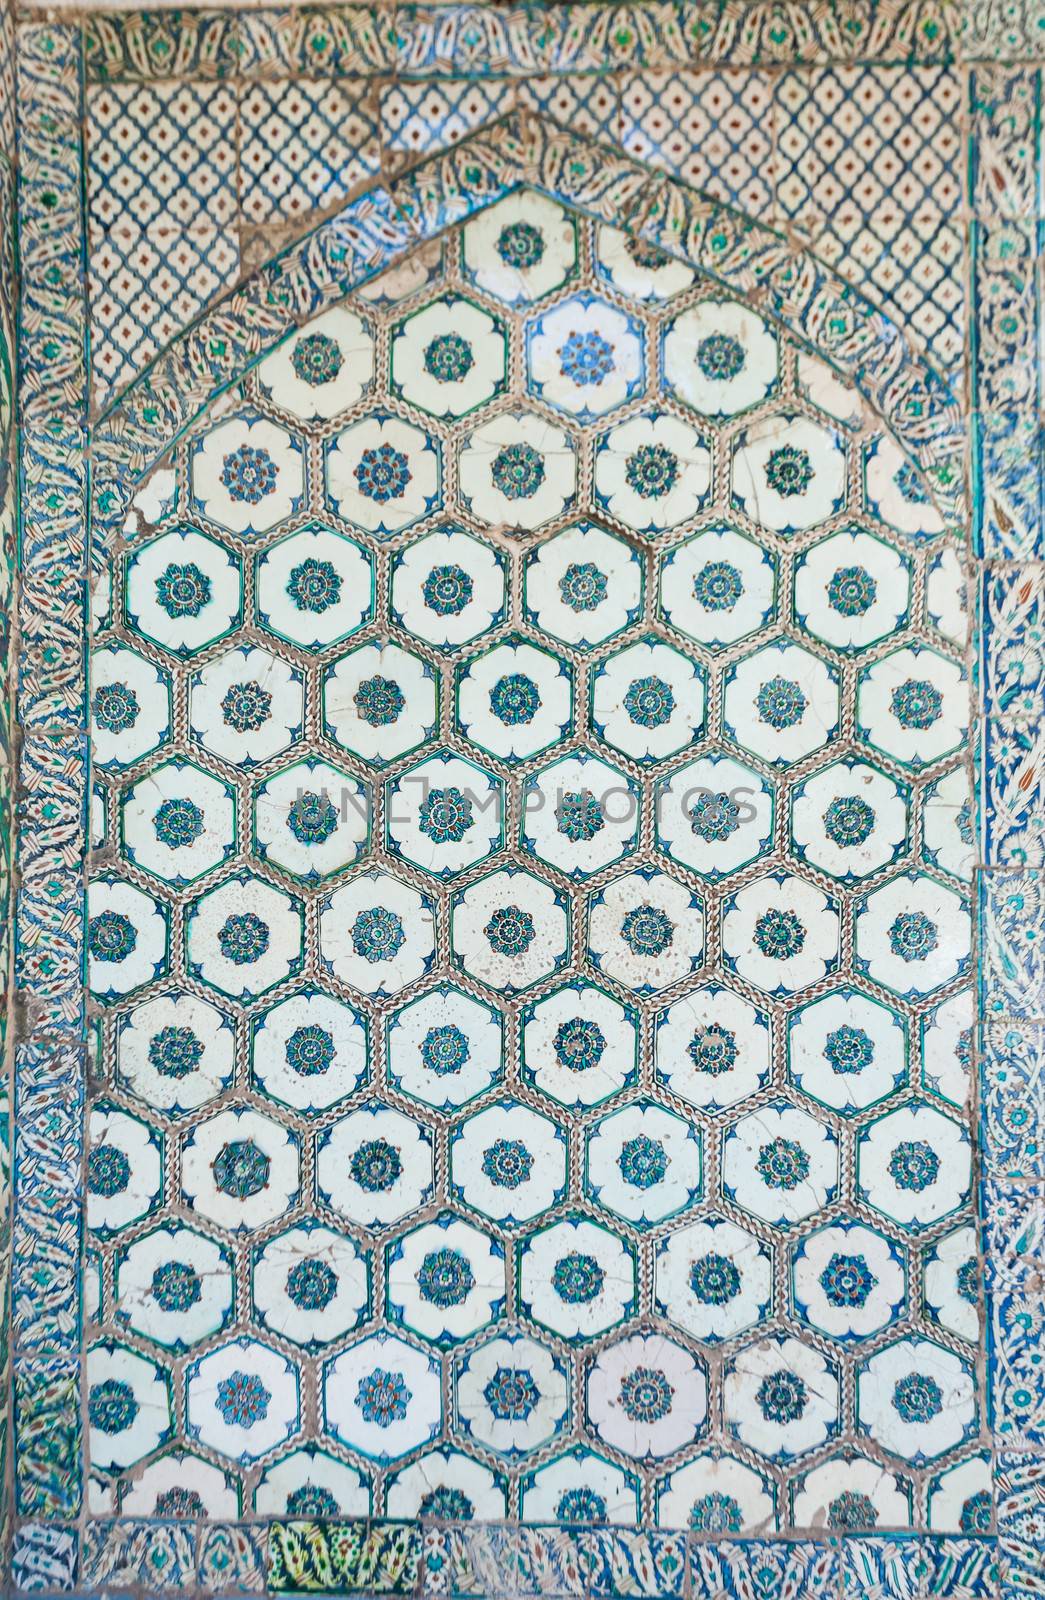 Turkish Tile by Creatista